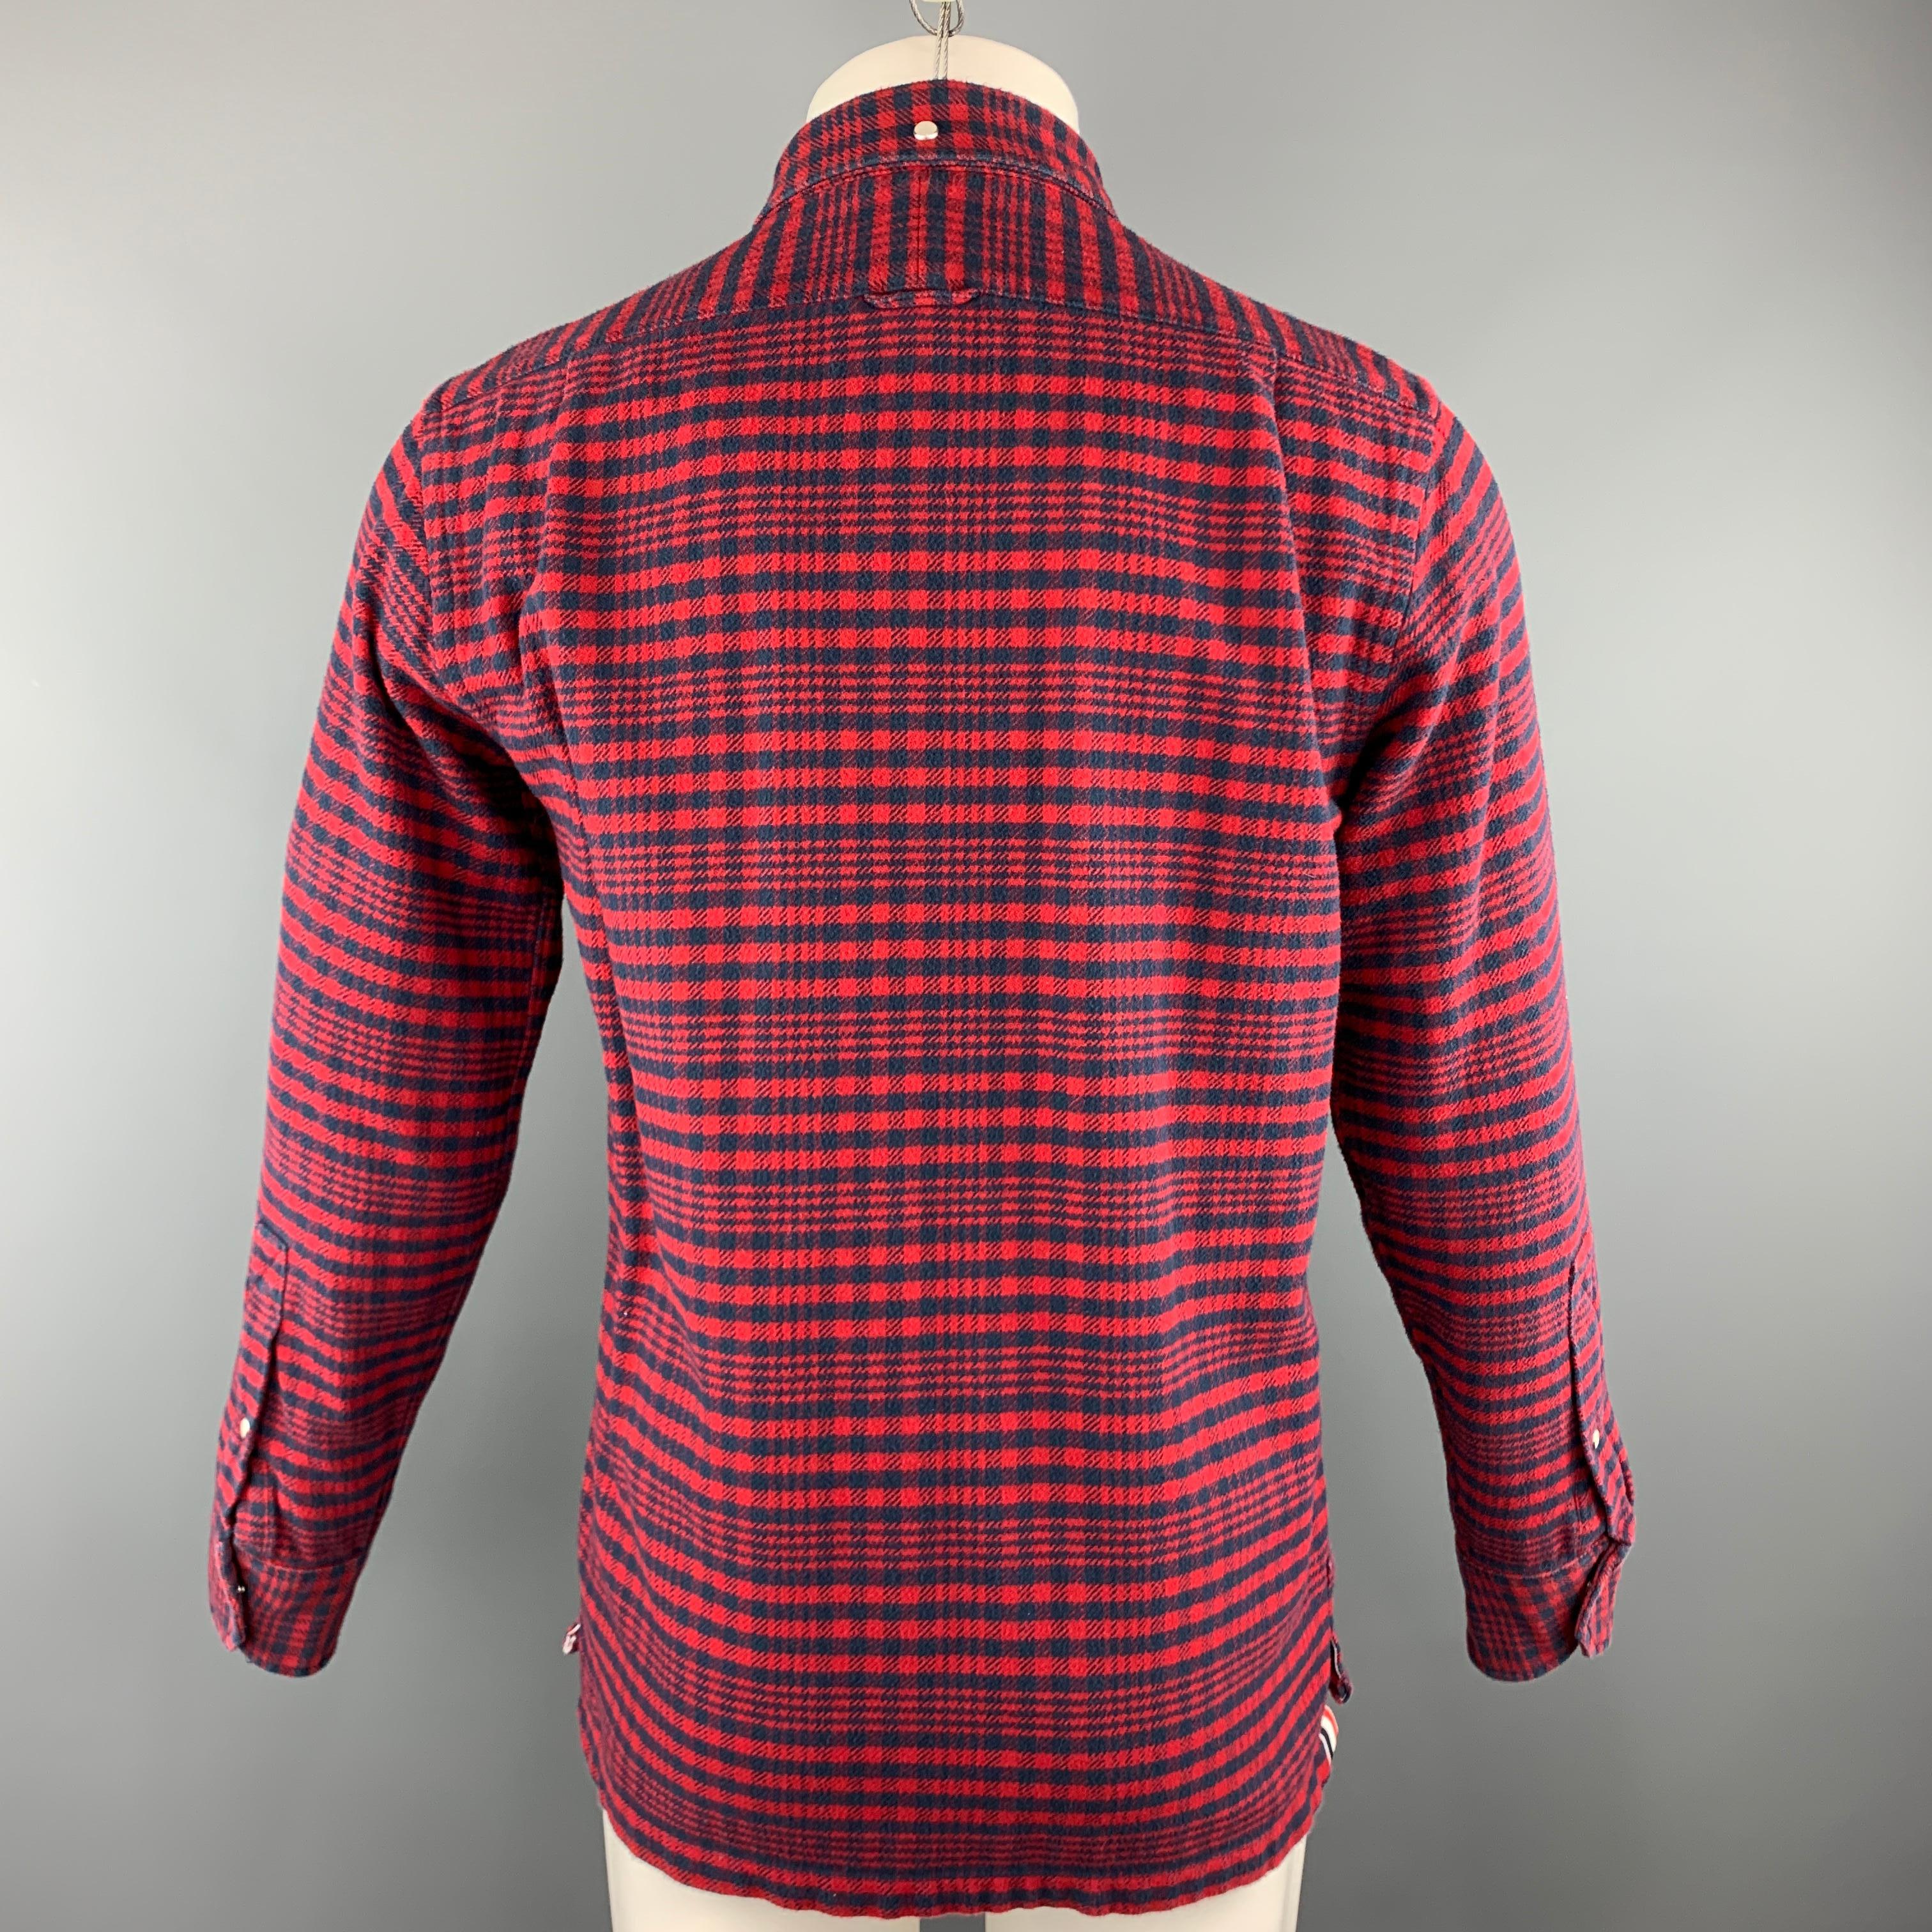 THOM BROWNE Size M Red & Navy Plaid Cotton Shirt Jacket Long Sleeve Shirt 1